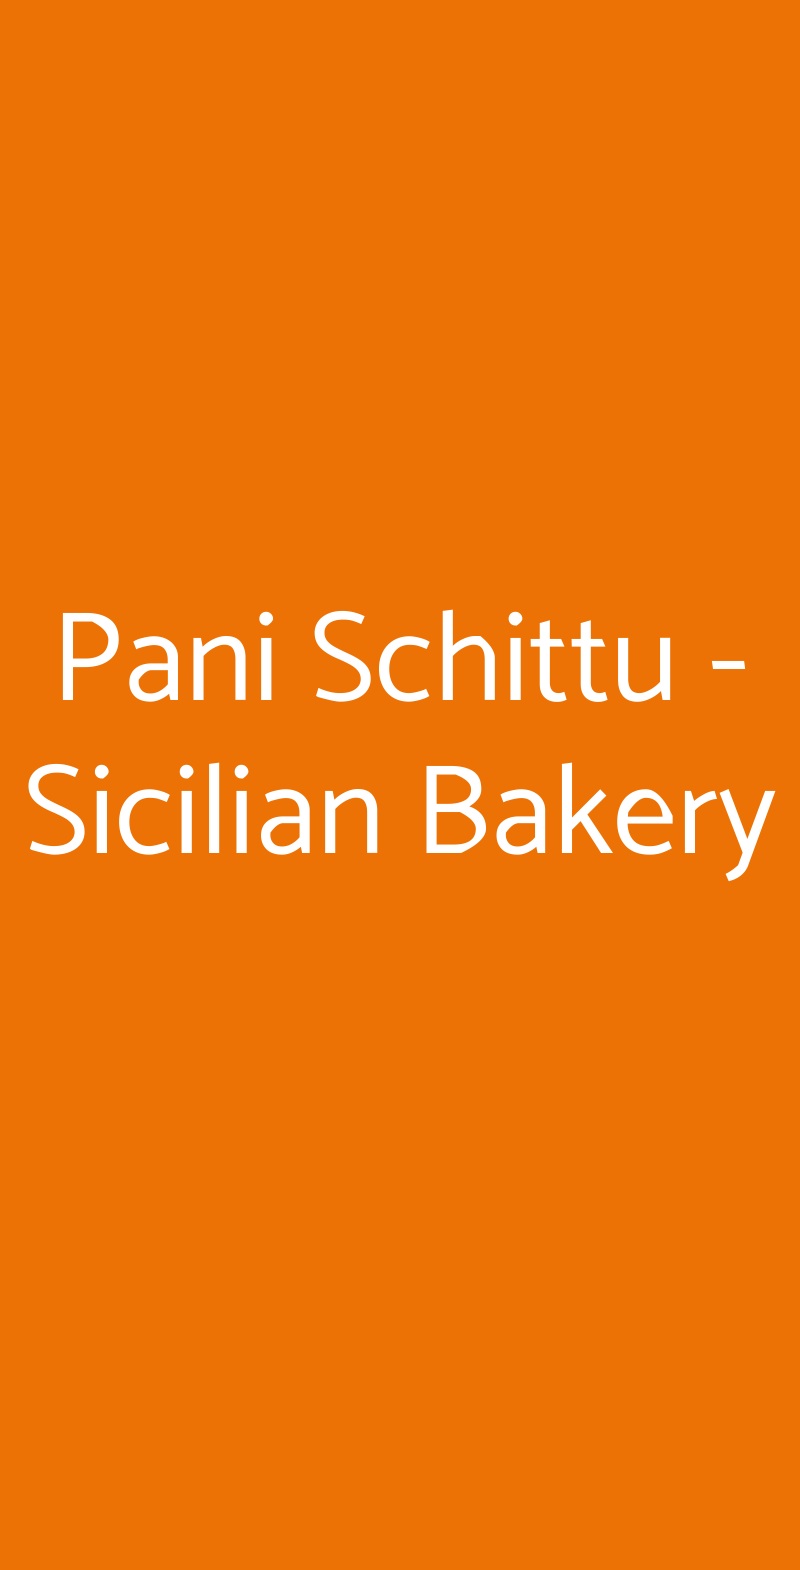 Pani Schittu - Sicilian Bakery Catania menù 1 pagina